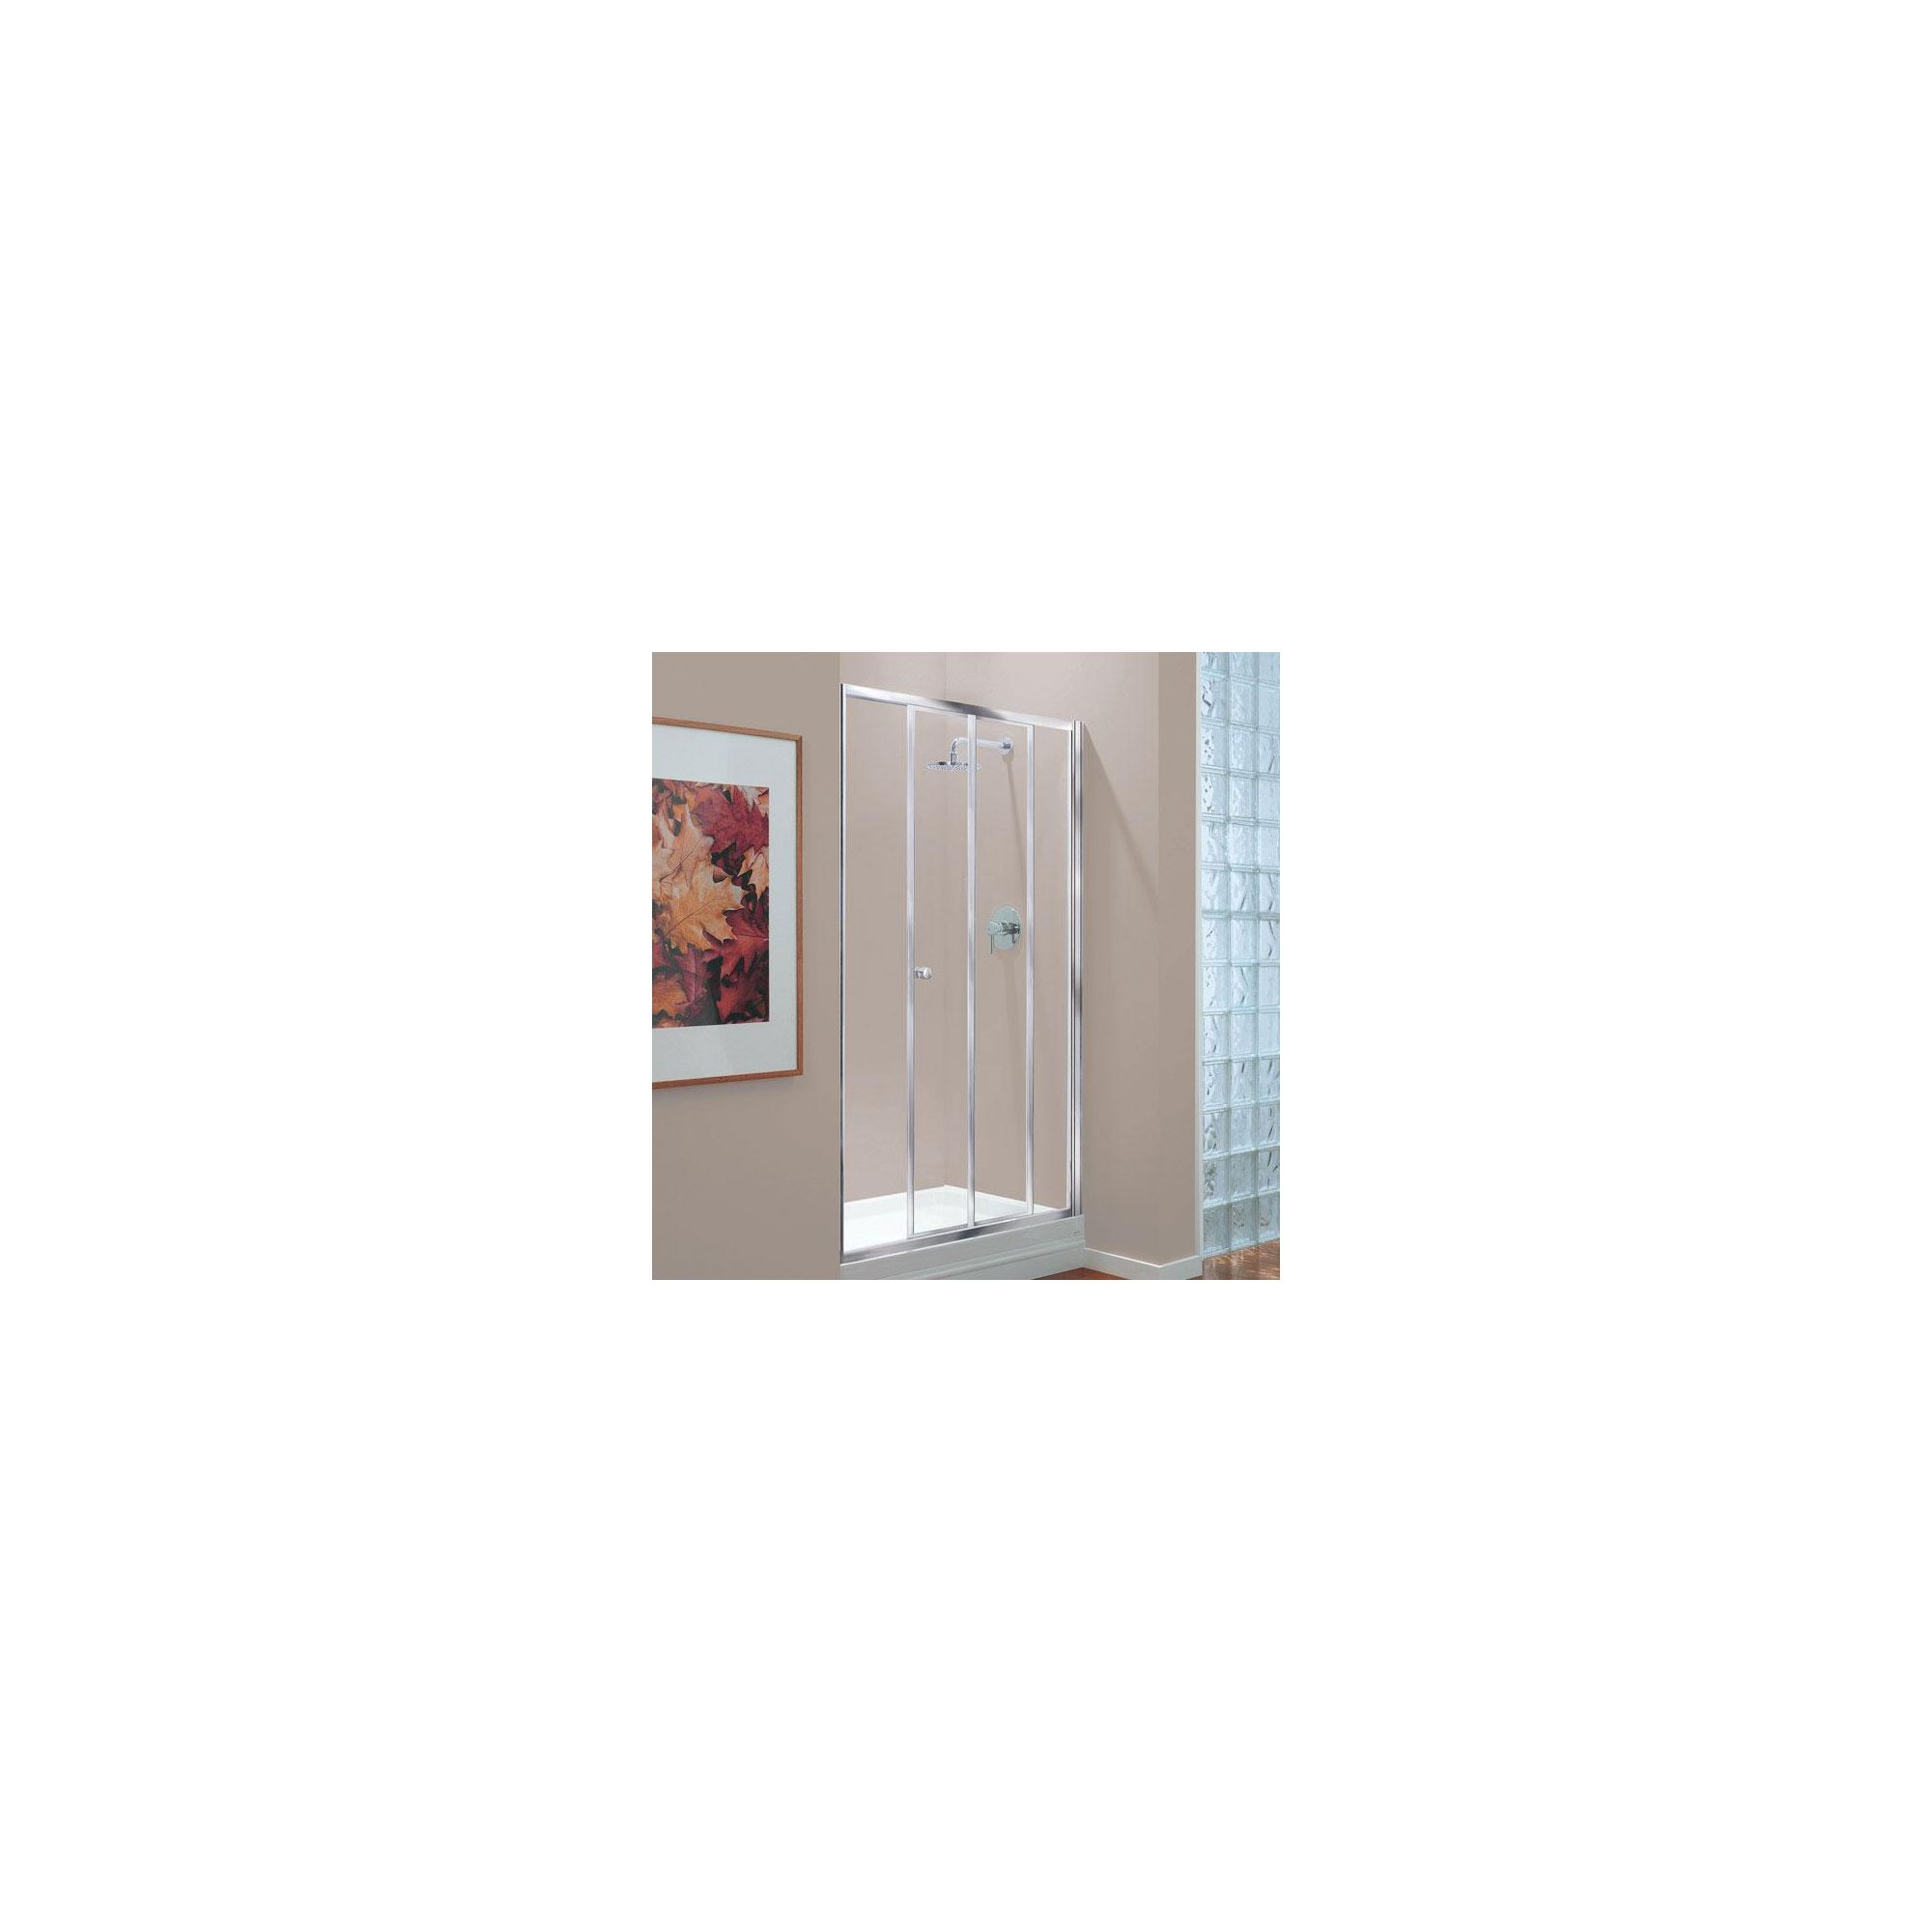 Coram GB Sliding Door Shower Enclosure, 1200mm x 800mm, Standard Tray, 4mm Glass, Chrome Frame at Tesco Direct